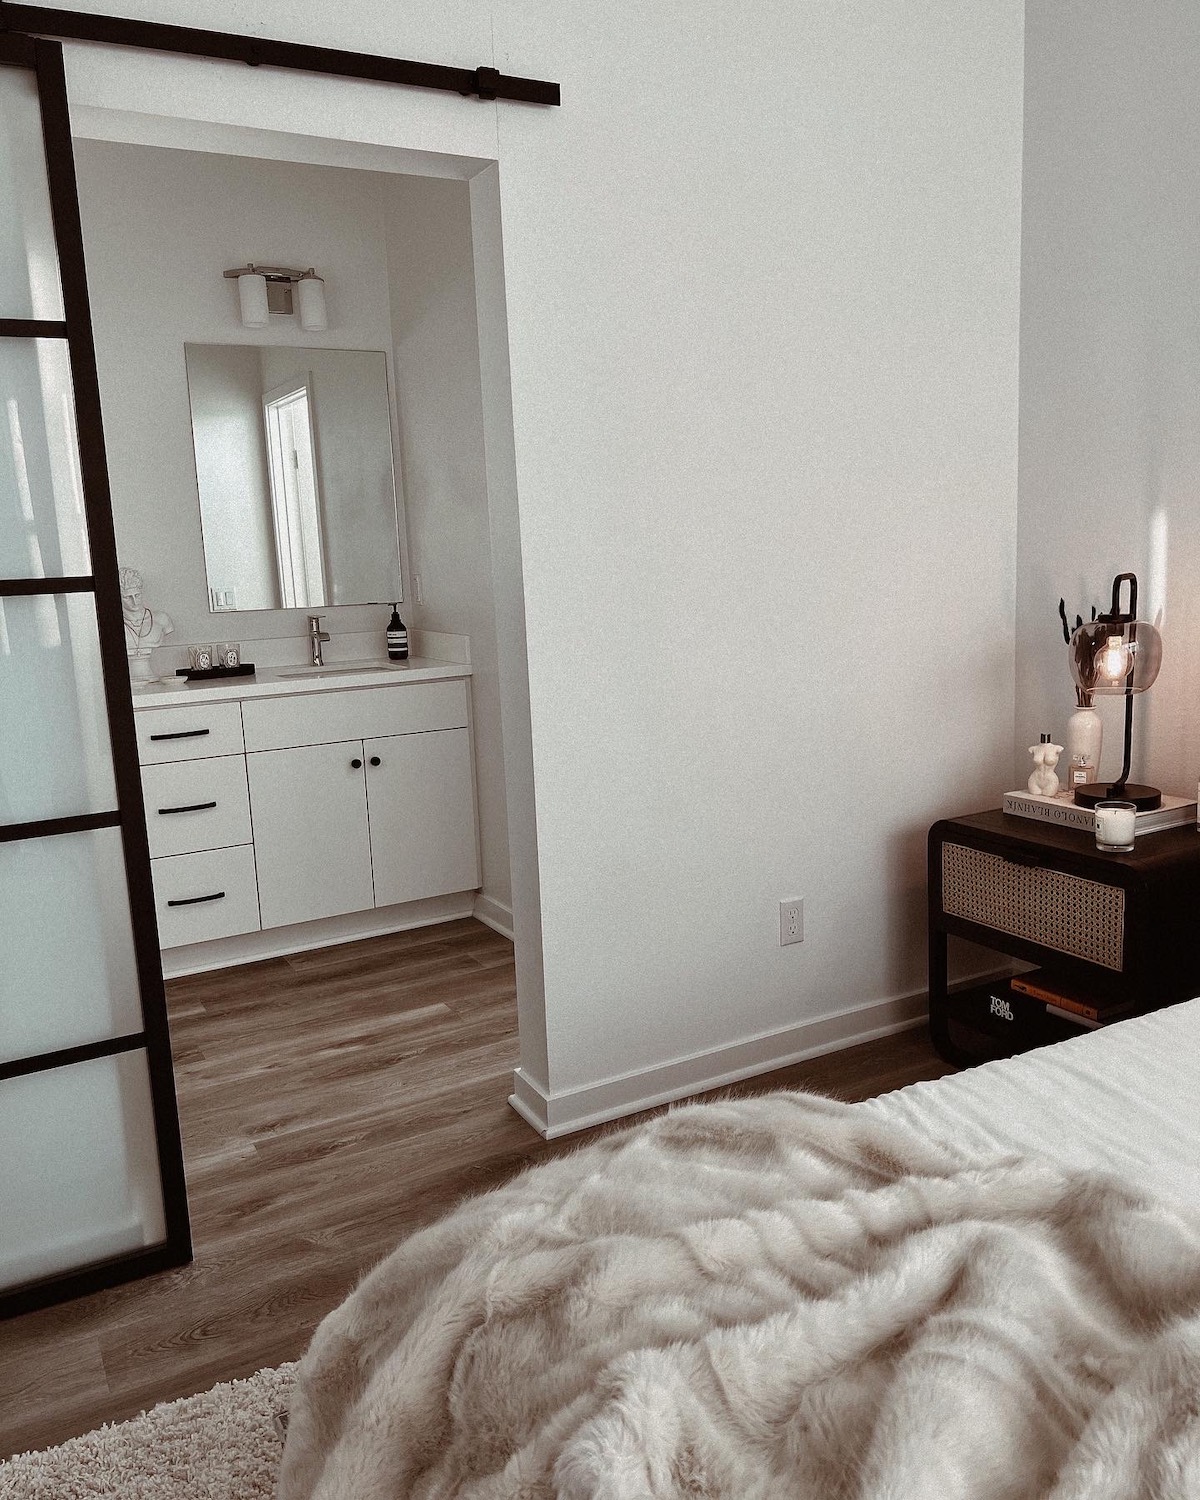 Neutral Master Bedroom Decor | Crate and Barrel | Minimal Bedroom Decor | Hayley Larue